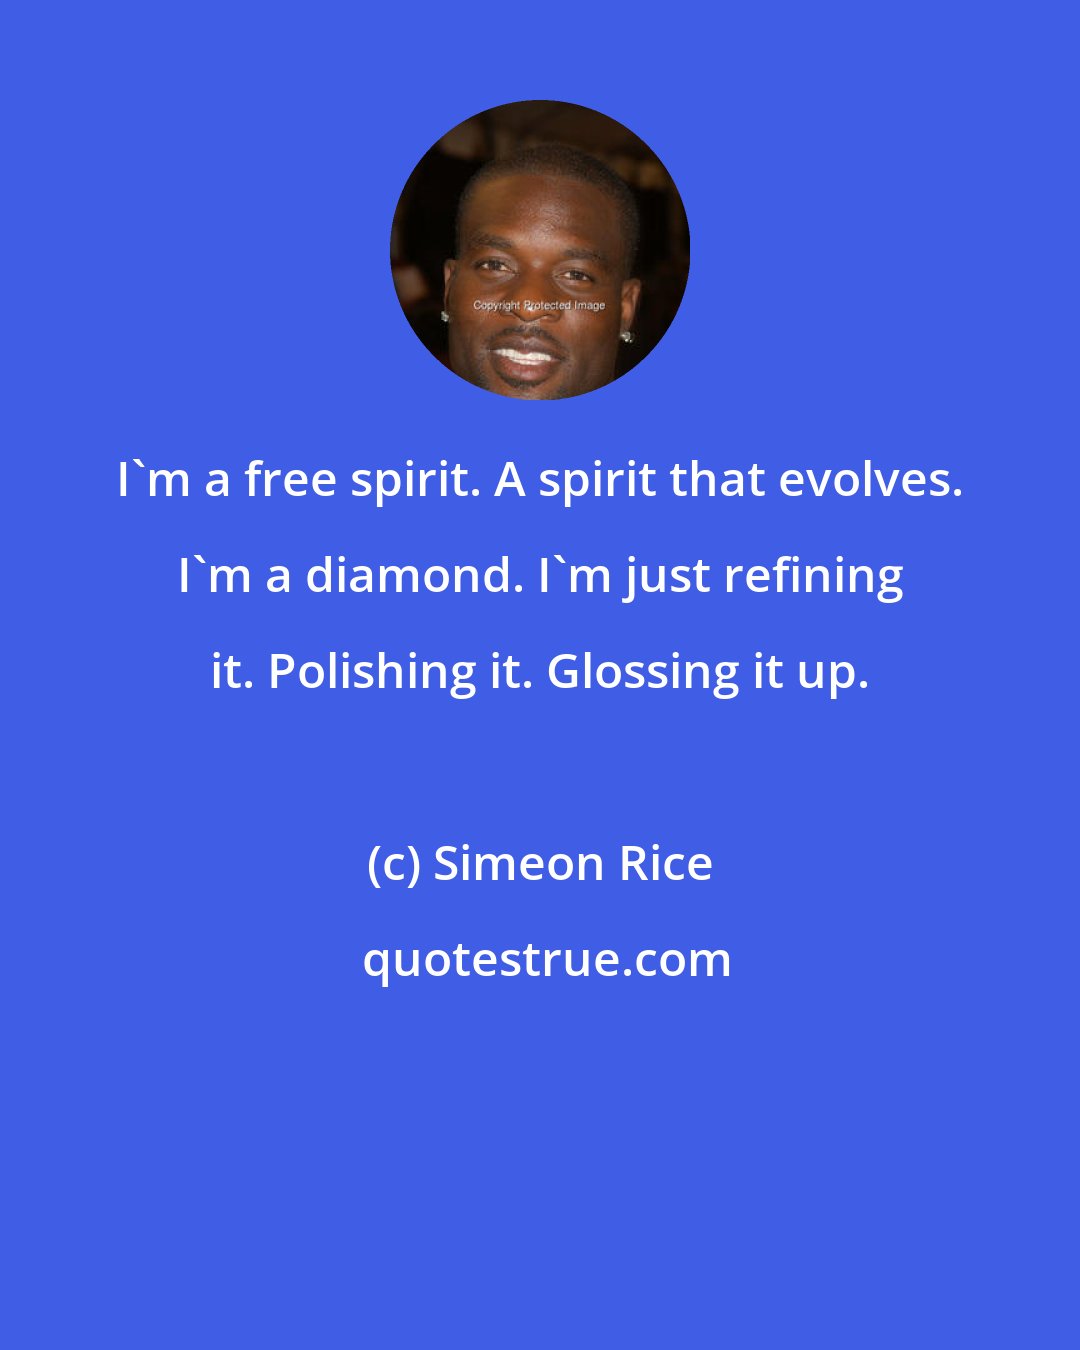 Simeon Rice: I'm a free spirit. A spirit that evolves. I'm a diamond. I'm just refining it. Polishing it. Glossing it up.